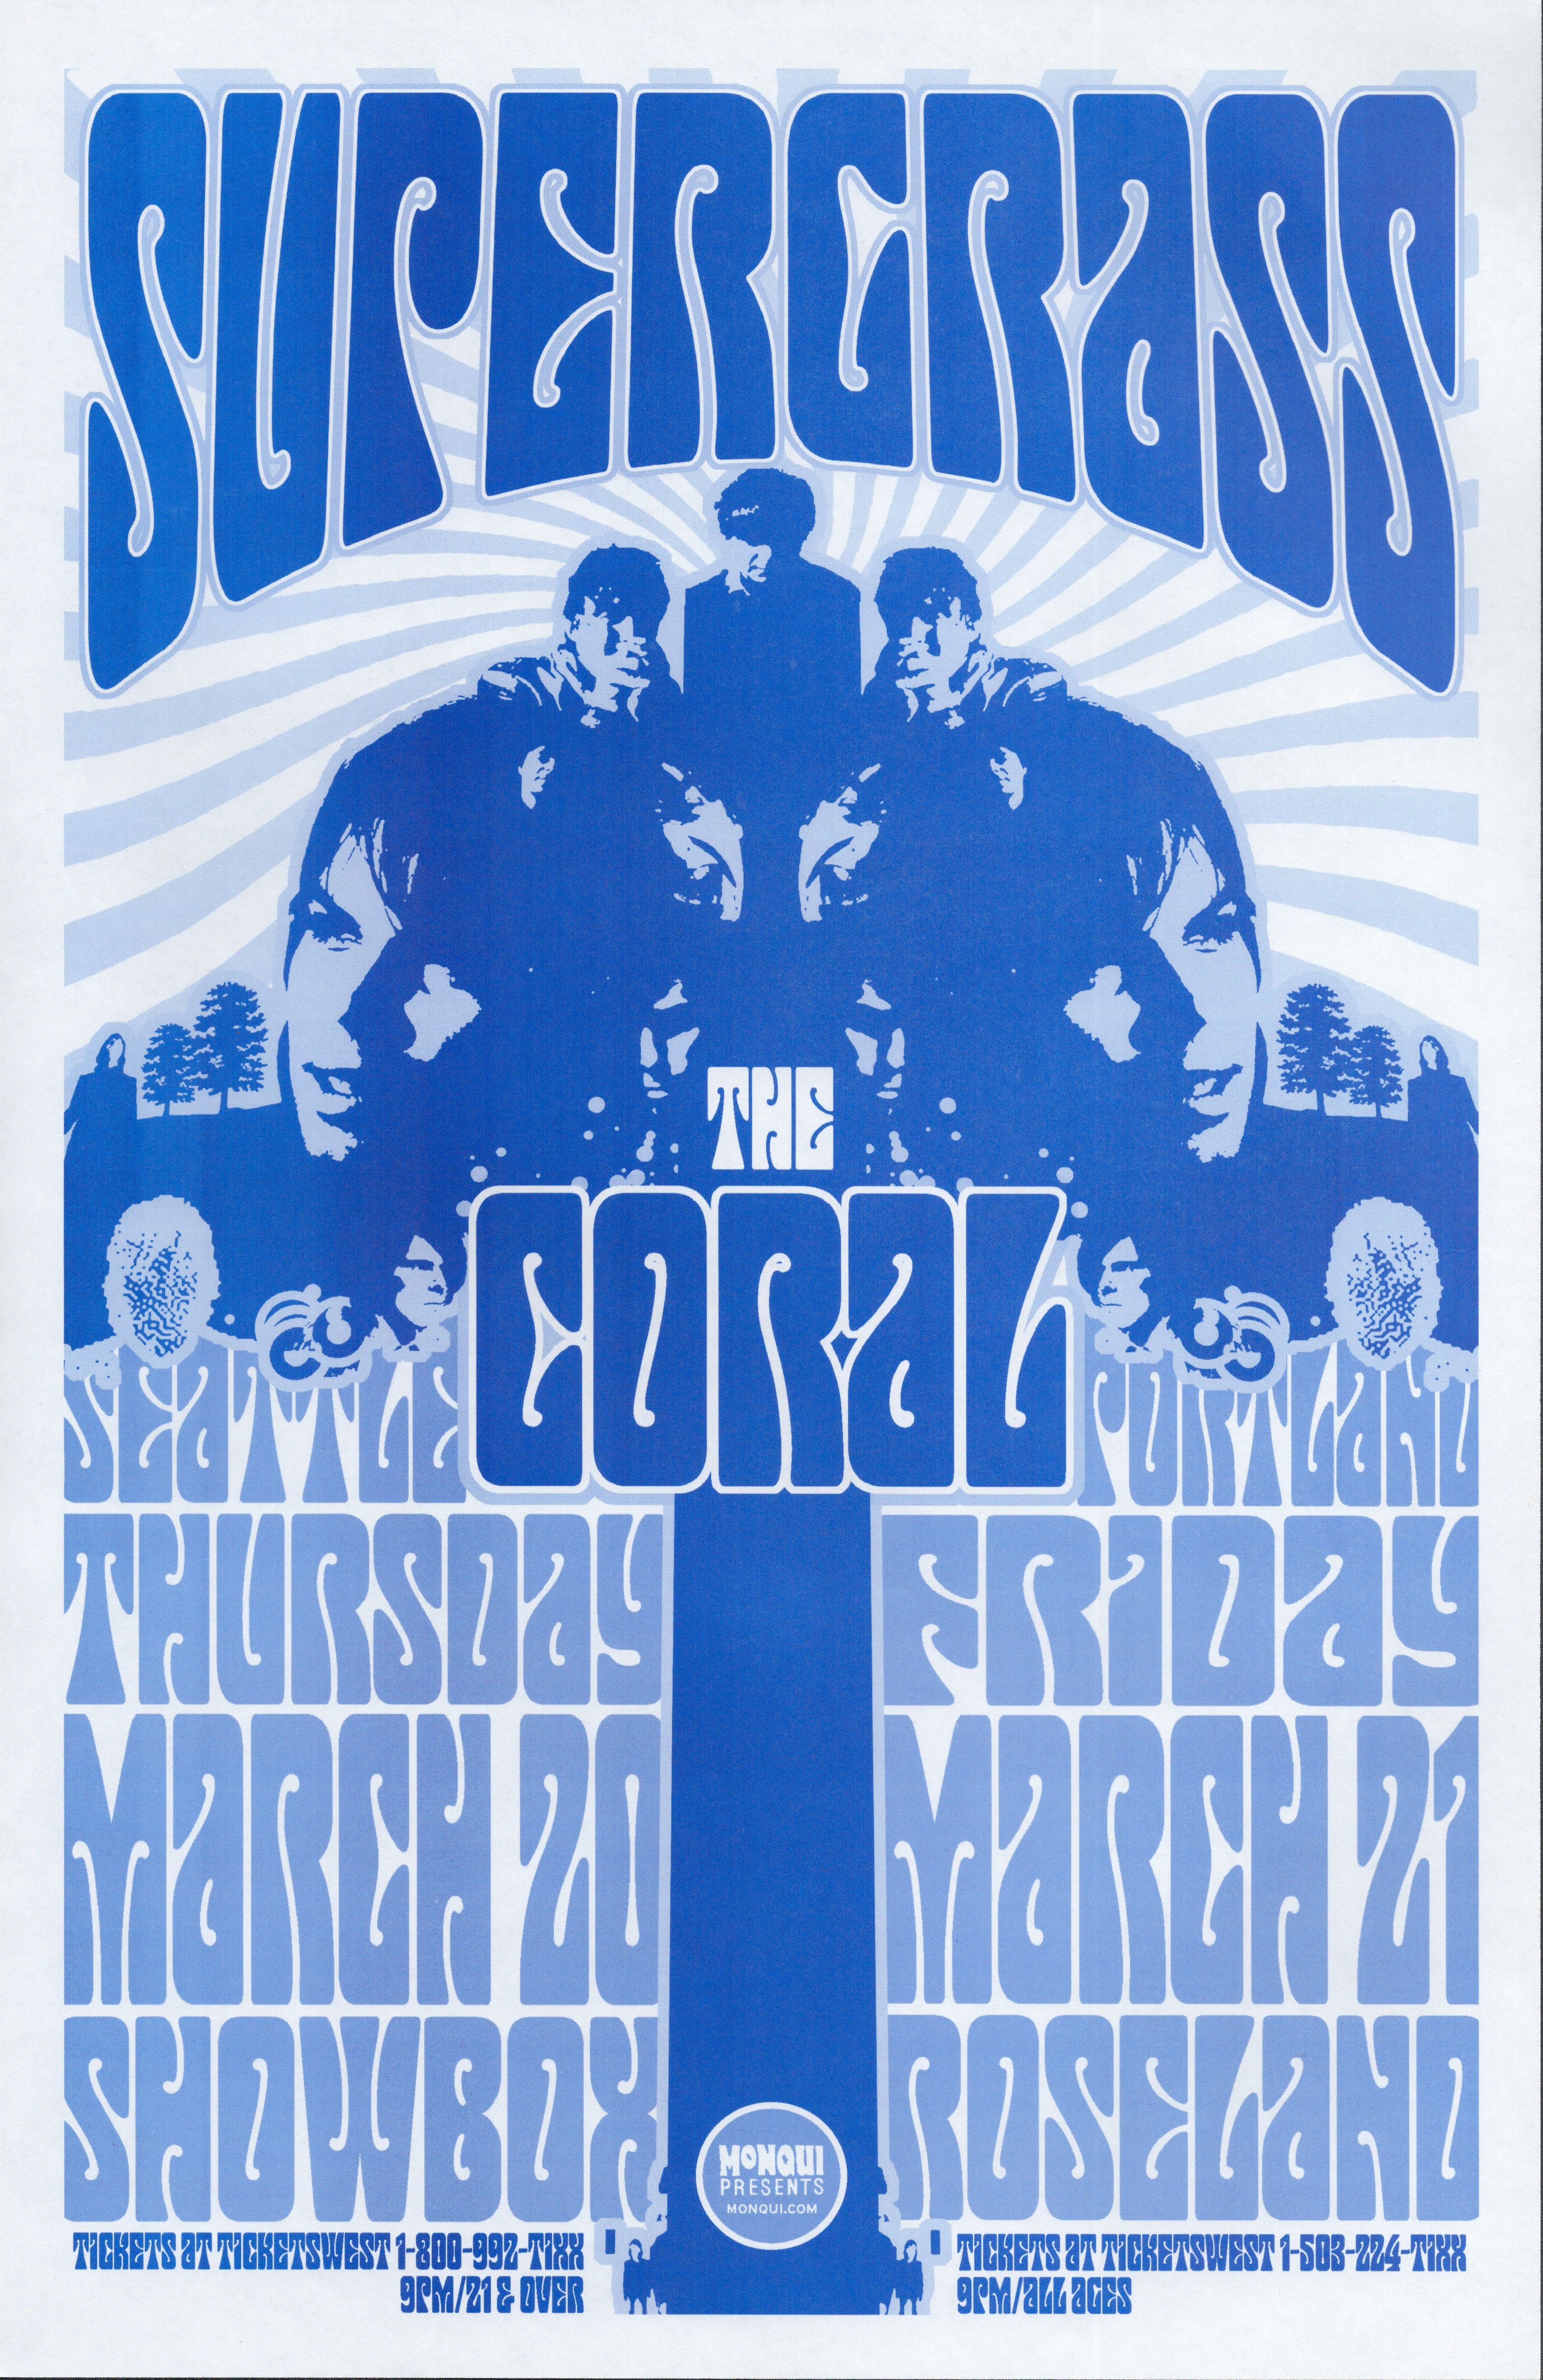 MXP-59.5 Supergrass Showbox & Roseland Theater 2003 Concert Poster